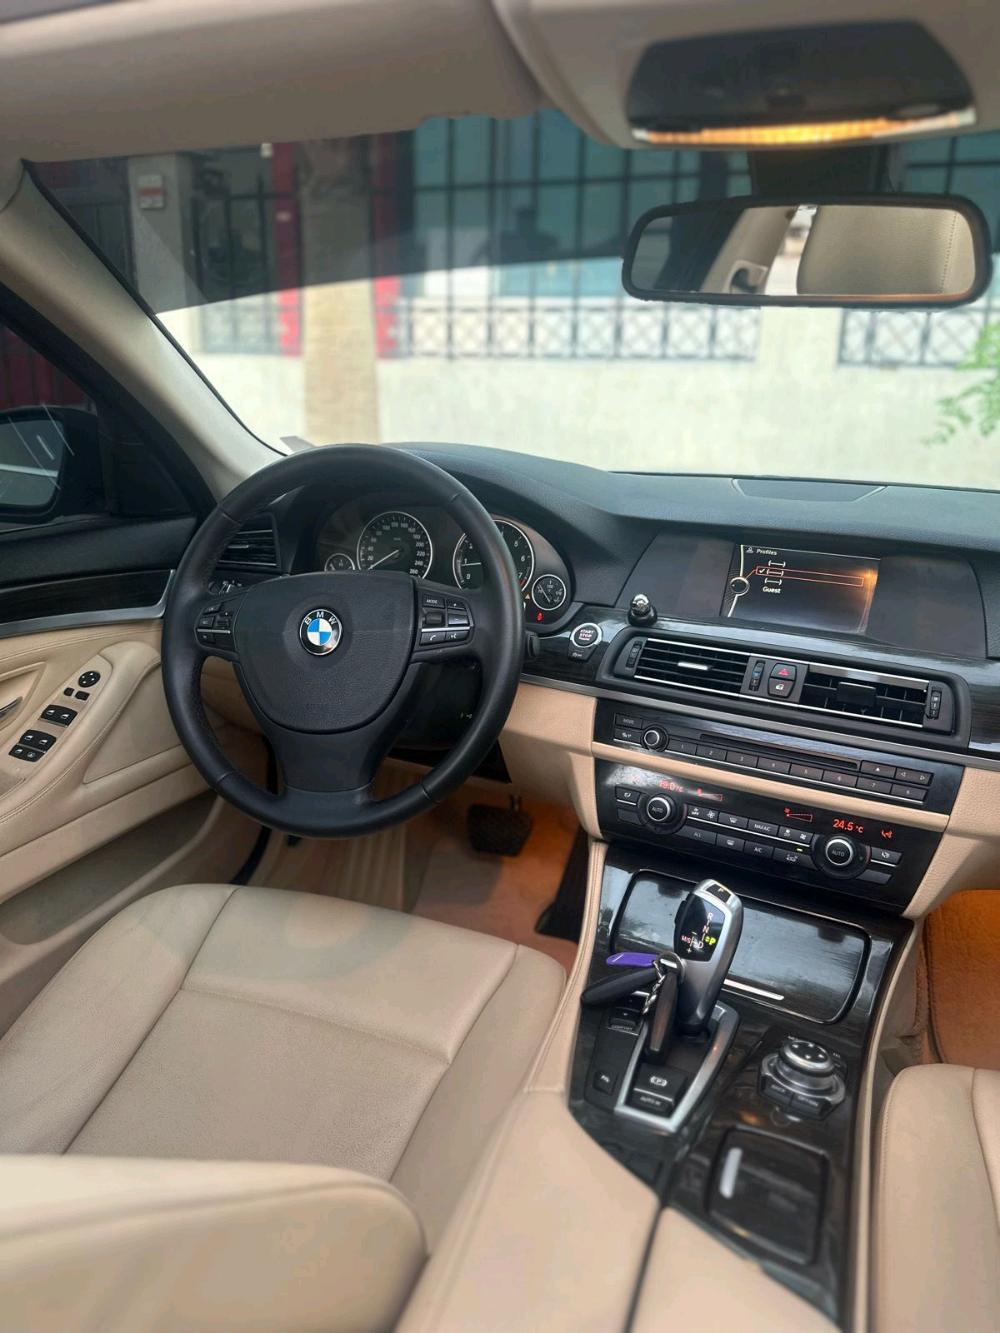 Cars for Sale_BMW_Al Jurf Industrial